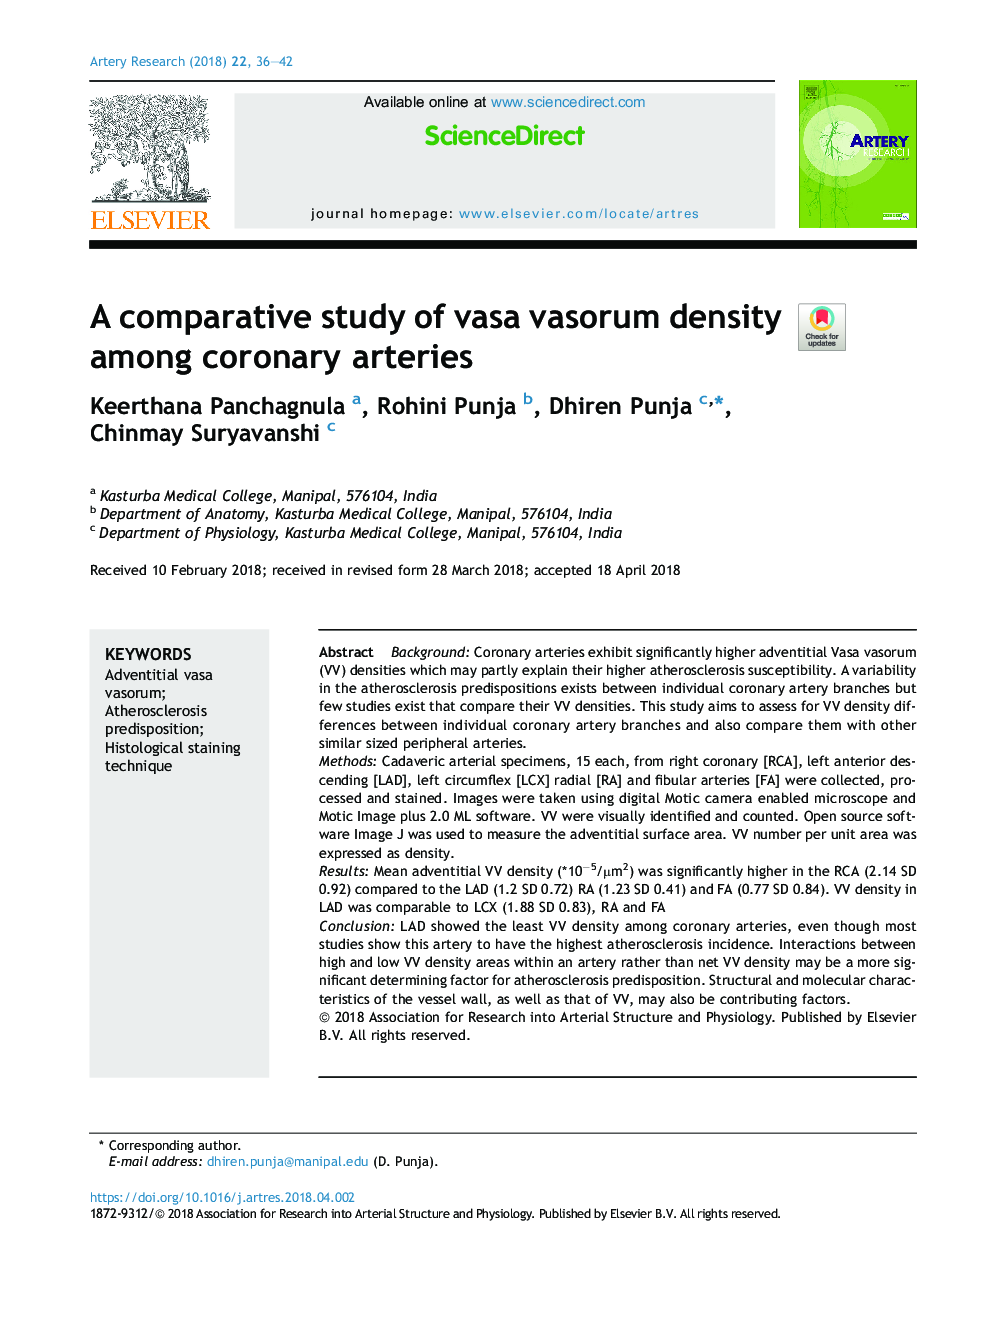 A comparative study of vasa vasorum density among coronary arteries